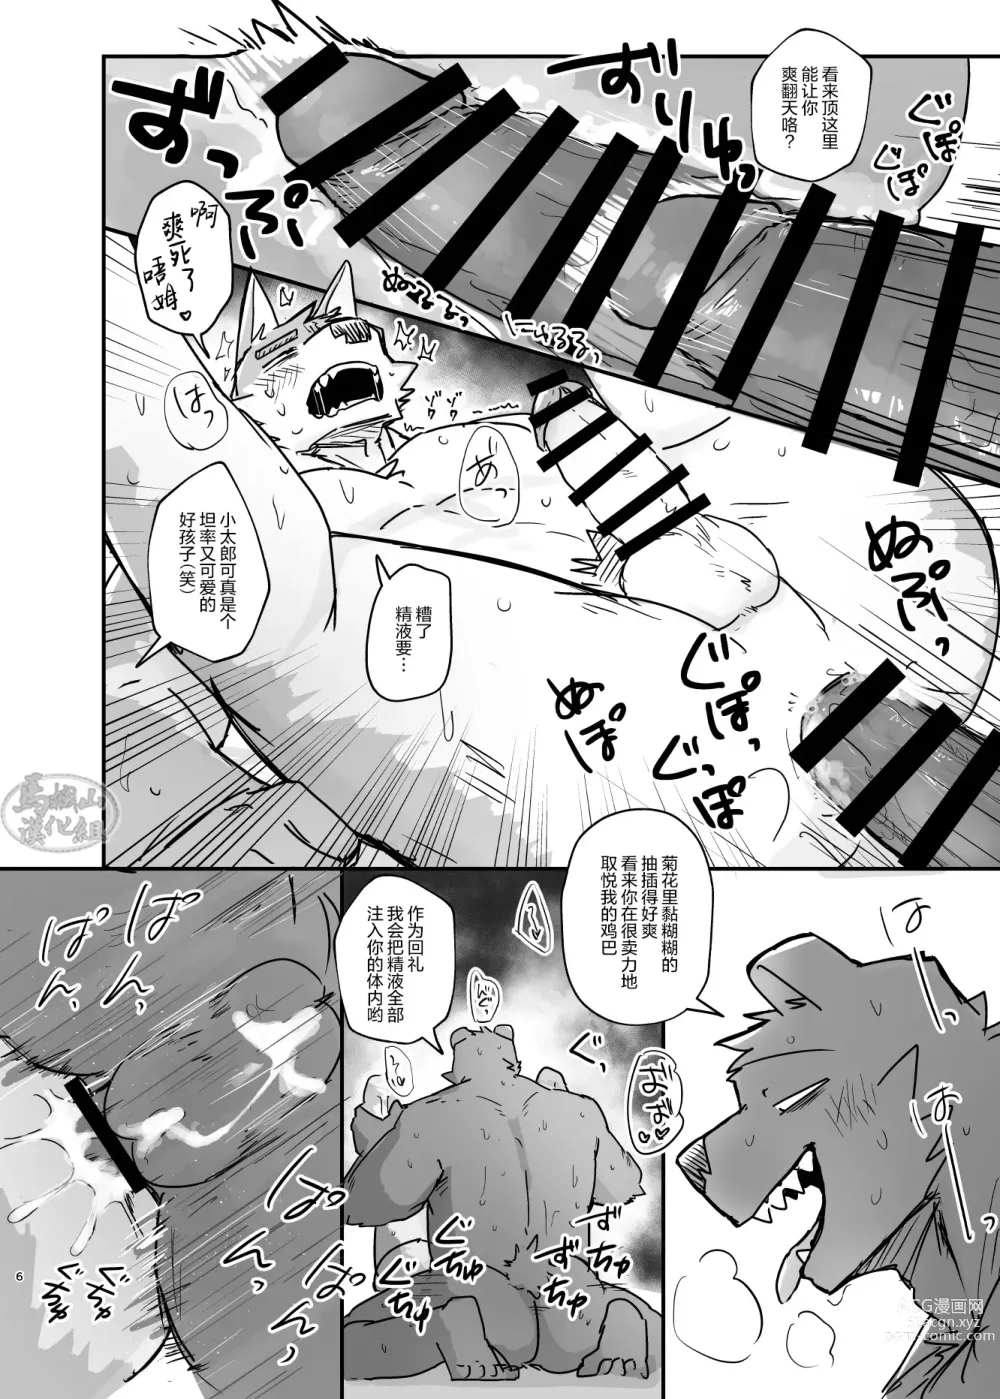 Page 6 of doujinshi 梦乡时分的情事